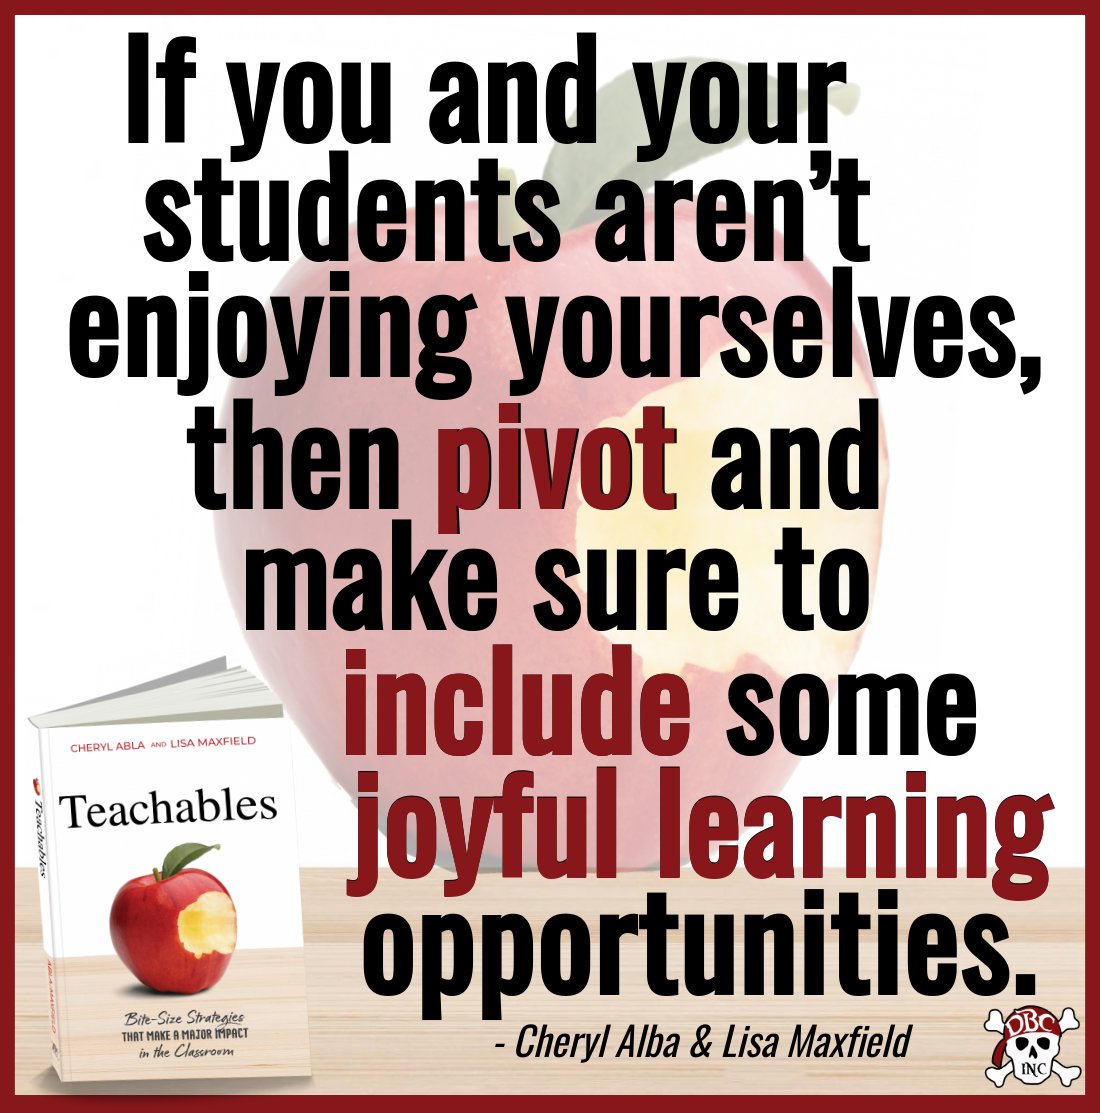 Let's be sure to include 'joyful learning opportunities.' Need ideas? ➡️🍎 #Teachables: Bite-Size Strategies That Make a Major Impact in the Classroom 📖 amazon.com/Teachables-Bit… #tlap #LeadLAP @leemaxfield29 @cherylabla @burgessdave @TaraMartinEDU